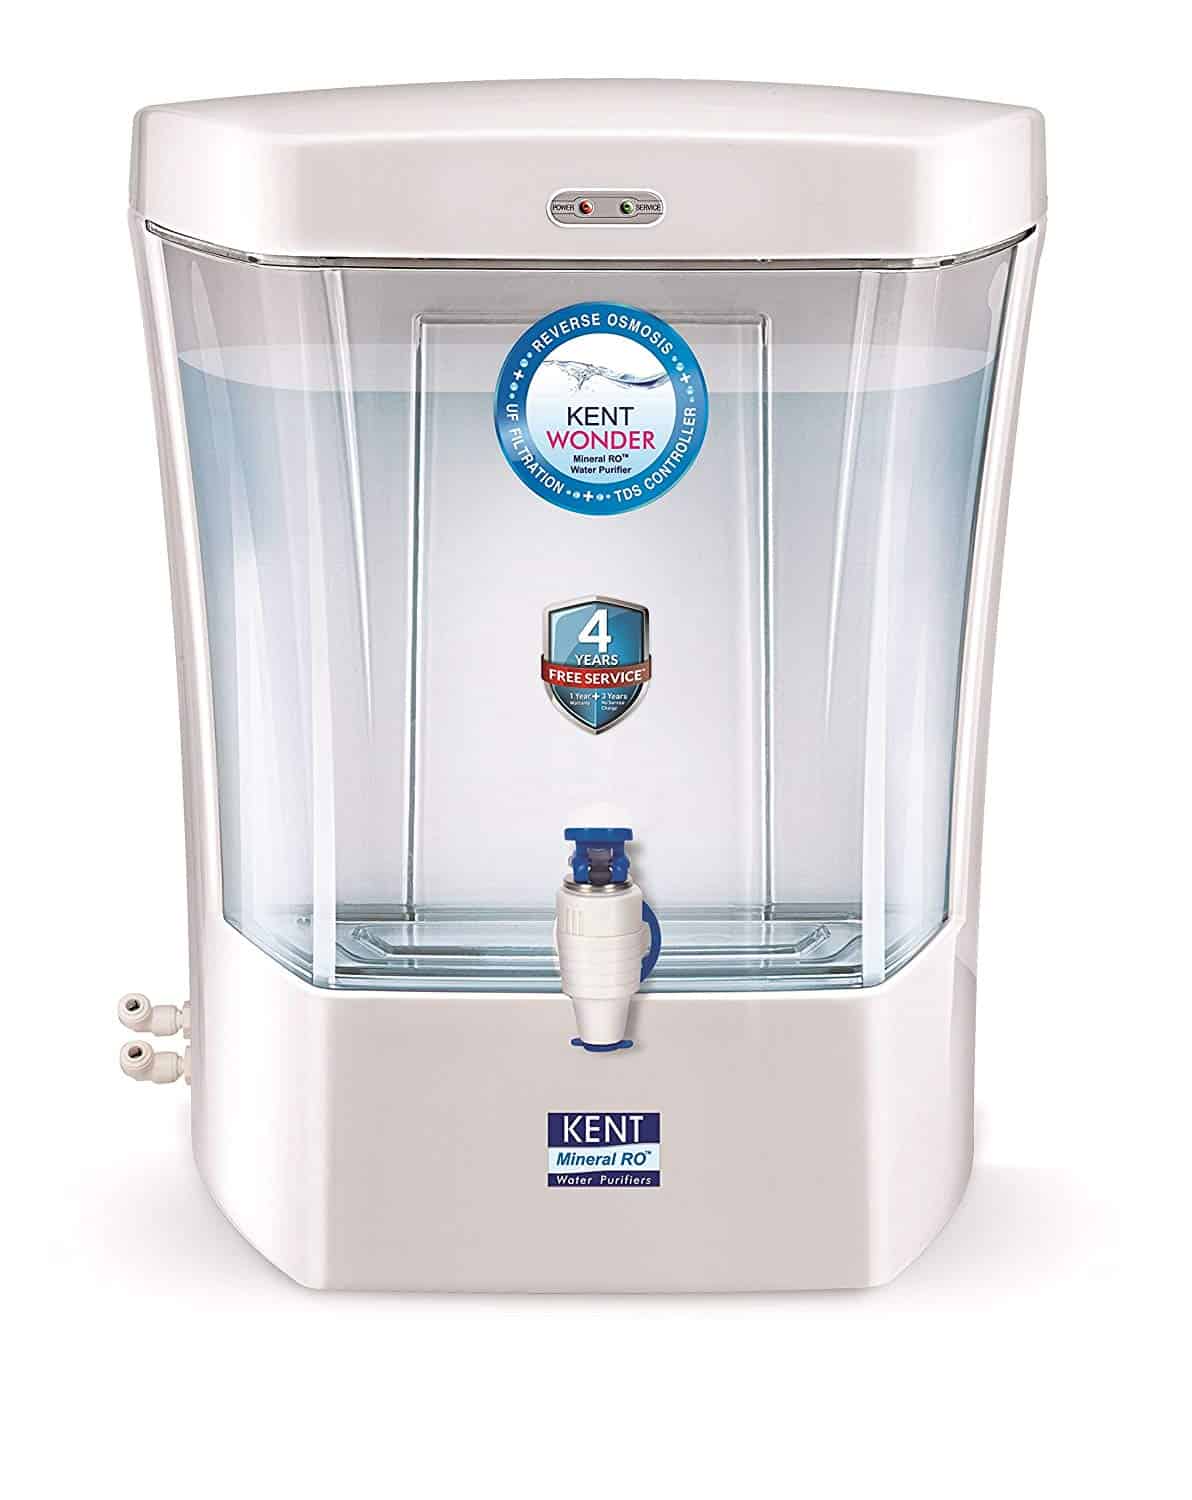 KENT Wonder 7-Litres RO Water Purifier